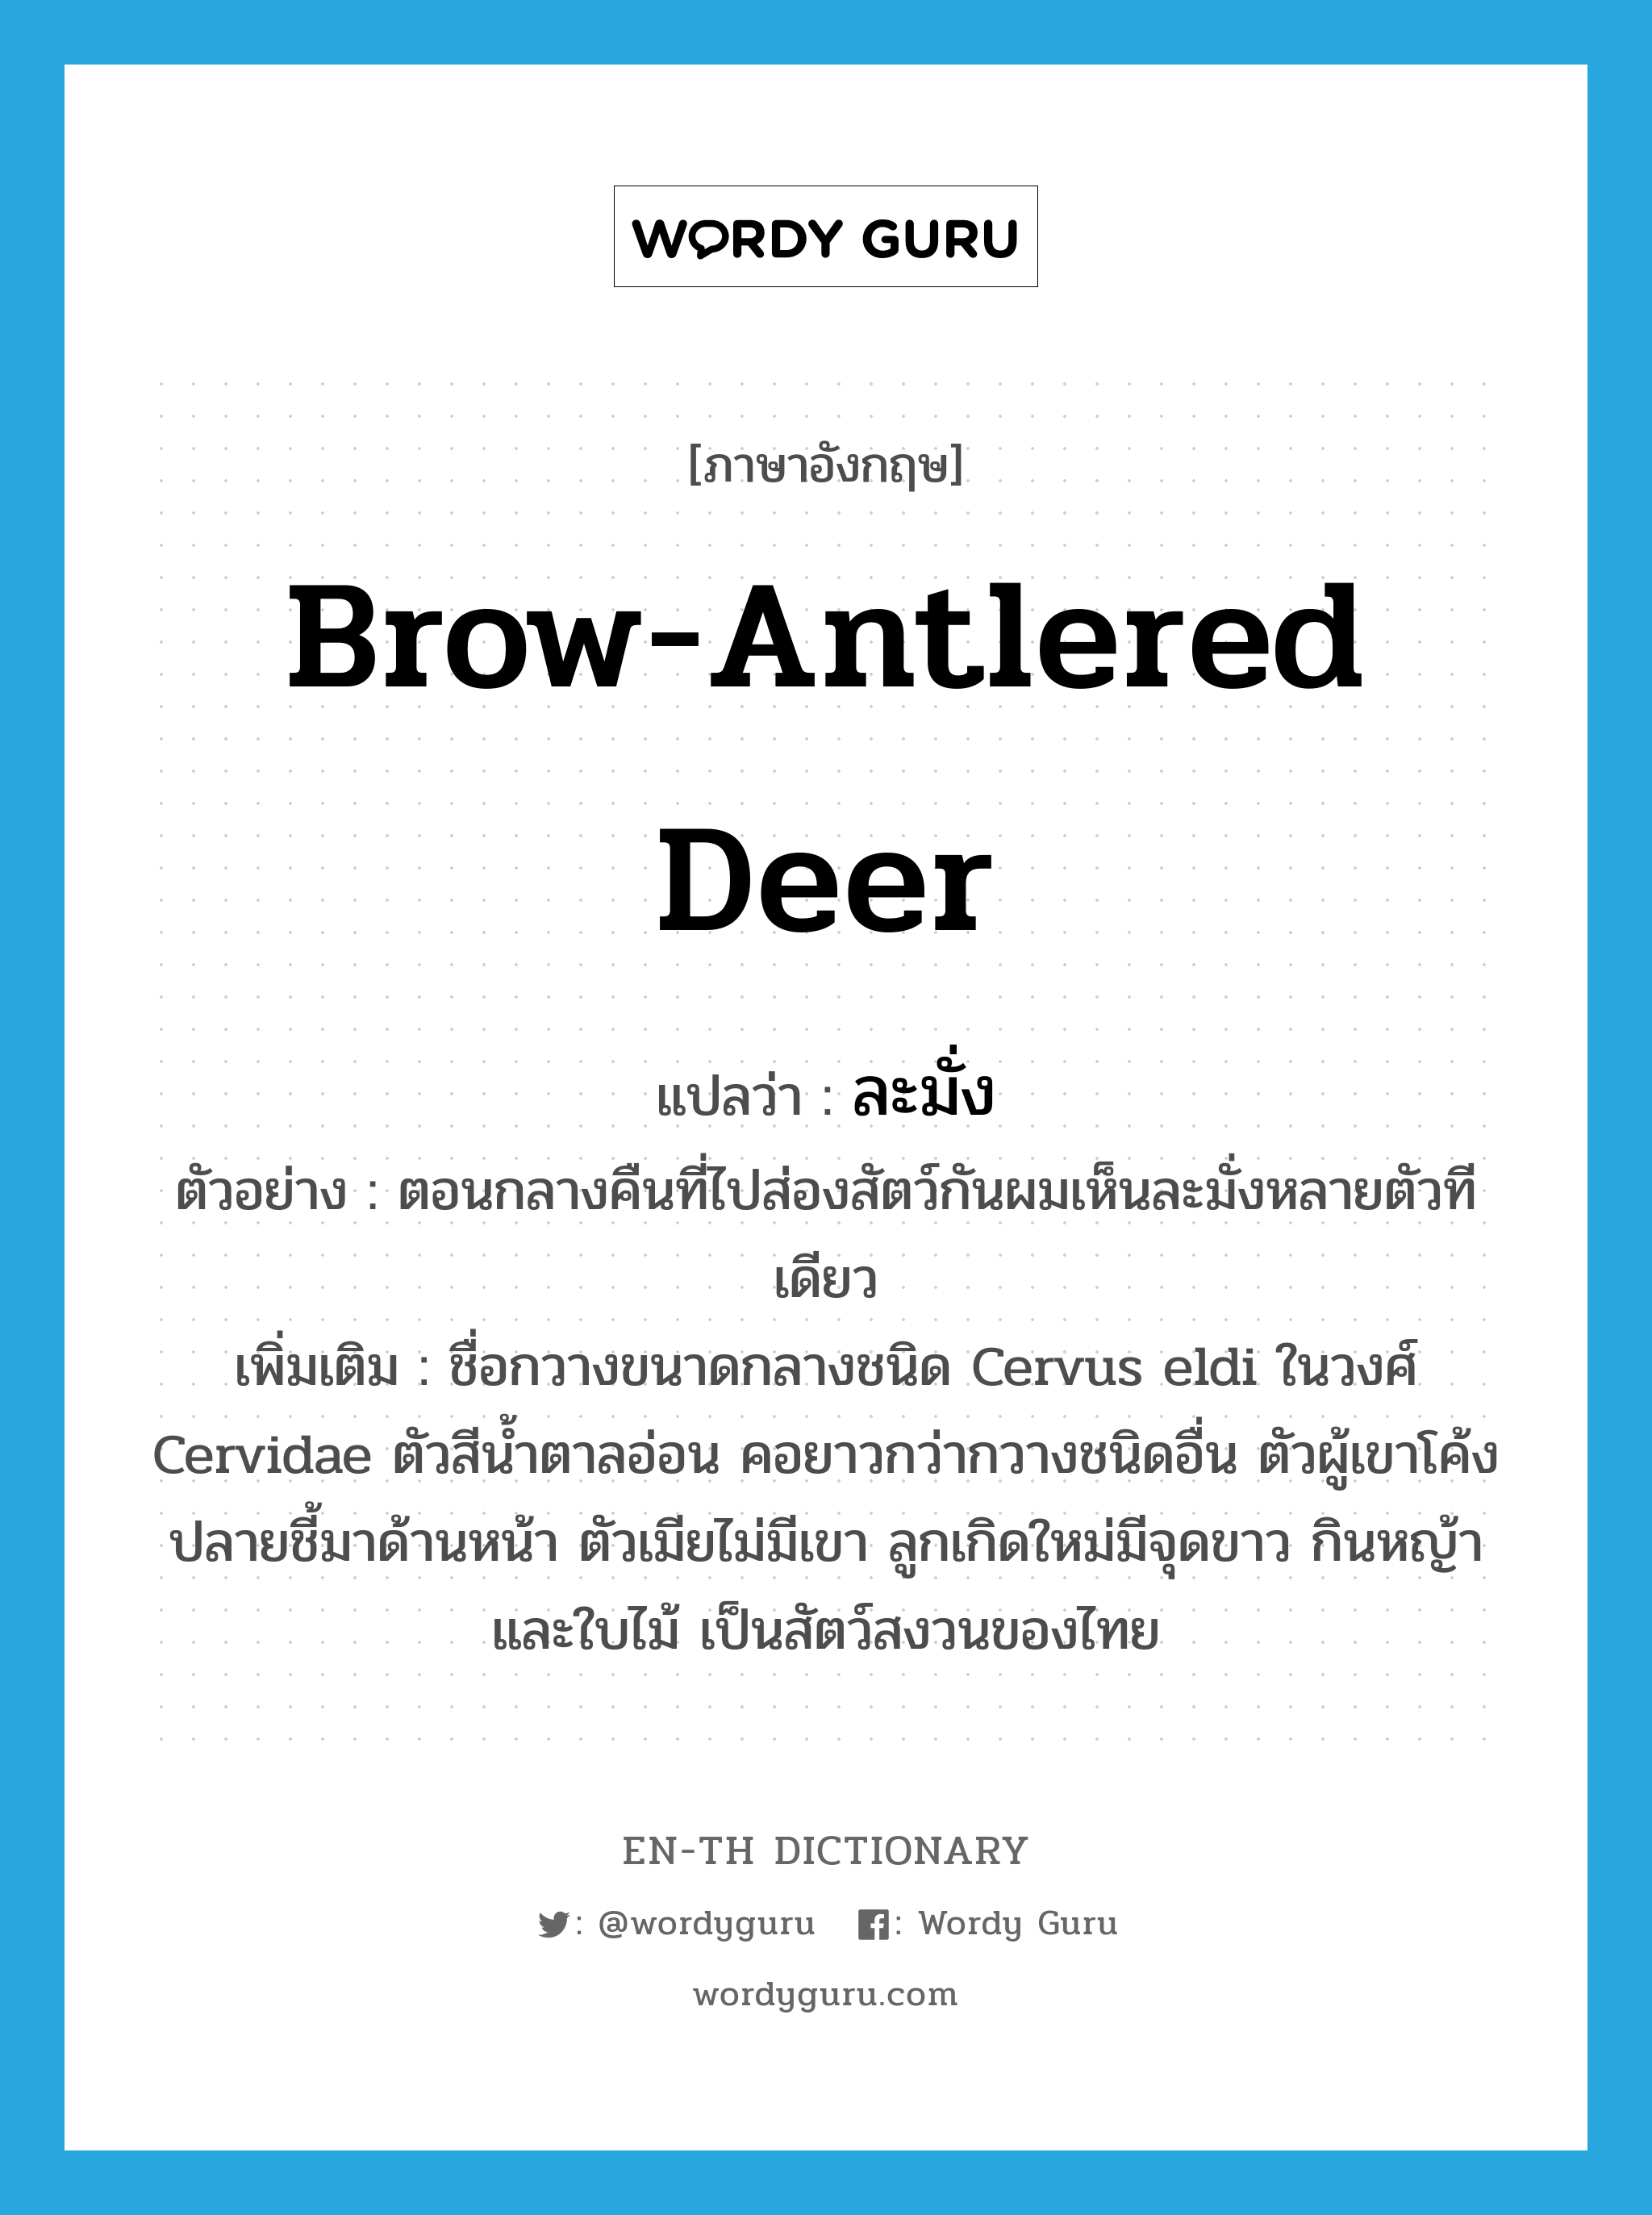 brow-antlered deer แปลว่า?, คำศัพท์ภาษาอังกฤษ brow-antlered deer แปลว่า ละมั่ง ประเภท N ตัวอย่าง ตอนกลางคืนที่ไปส่องสัตว์กันผมเห็นละมั่งหลายตัวทีเดียว เพิ่มเติม ชื่อกวางขนาดกลางชนิด Cervus eldi ในวงศ์ Cervidae ตัวสีน้ำตาลอ่อน คอยาวกว่ากวางชนิดอื่น ตัวผู้เขาโค้งปลายชี้มาด้านหน้า ตัวเมียไม่มีเขา ลูกเกิดใหม่มีจุดขาว กินหญ้าและใบไม้ เป็นสัตว์สงวนของไทย หมวด N